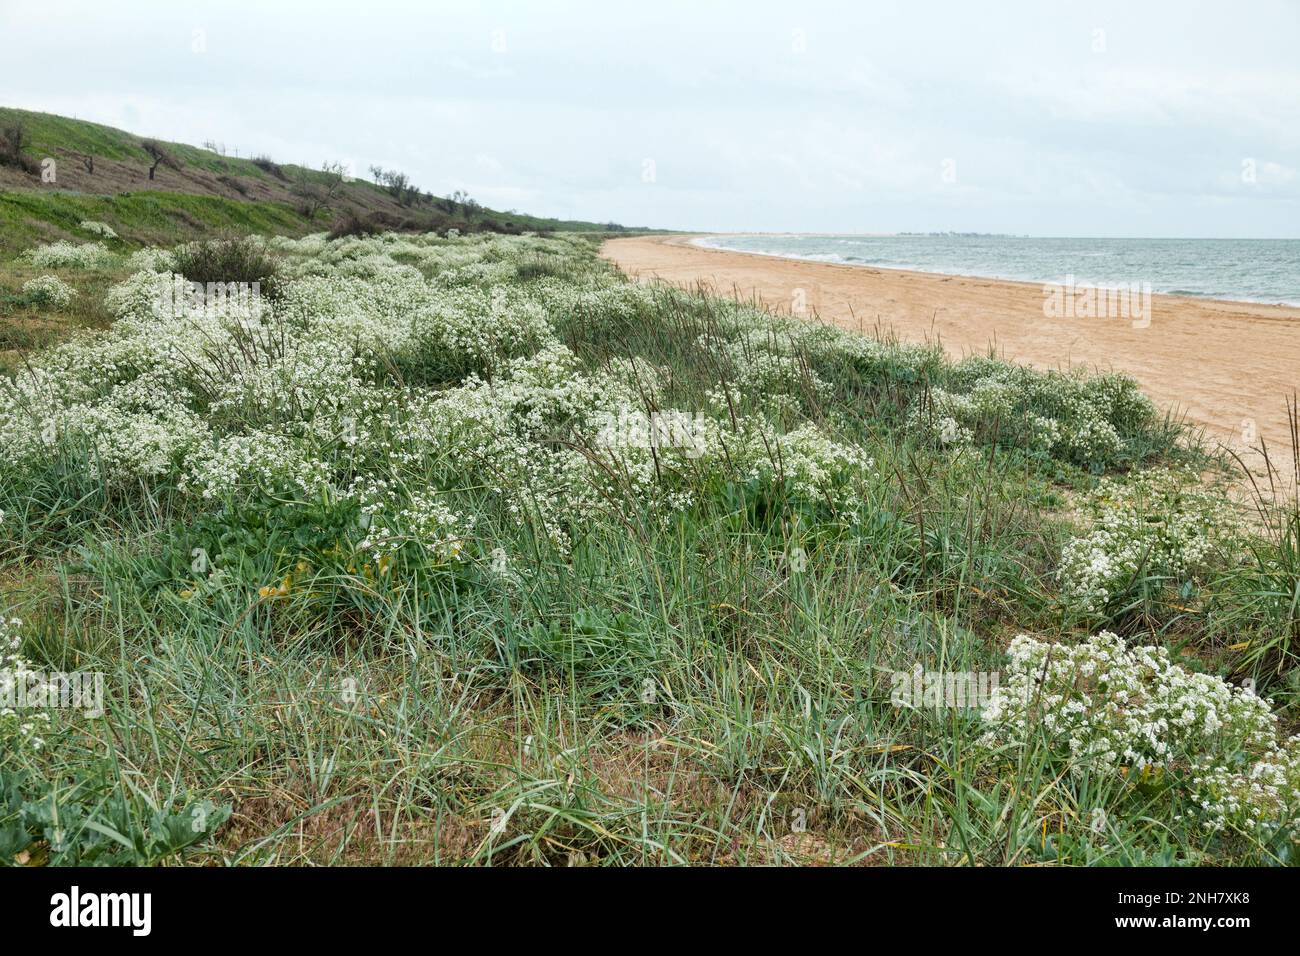 Sand-shell beach of sea and sand dunes with psammophytic vegetation. White Russian sea kale (Crambe tatarica), European dune grass (Elymus arenarius) Stock Photo